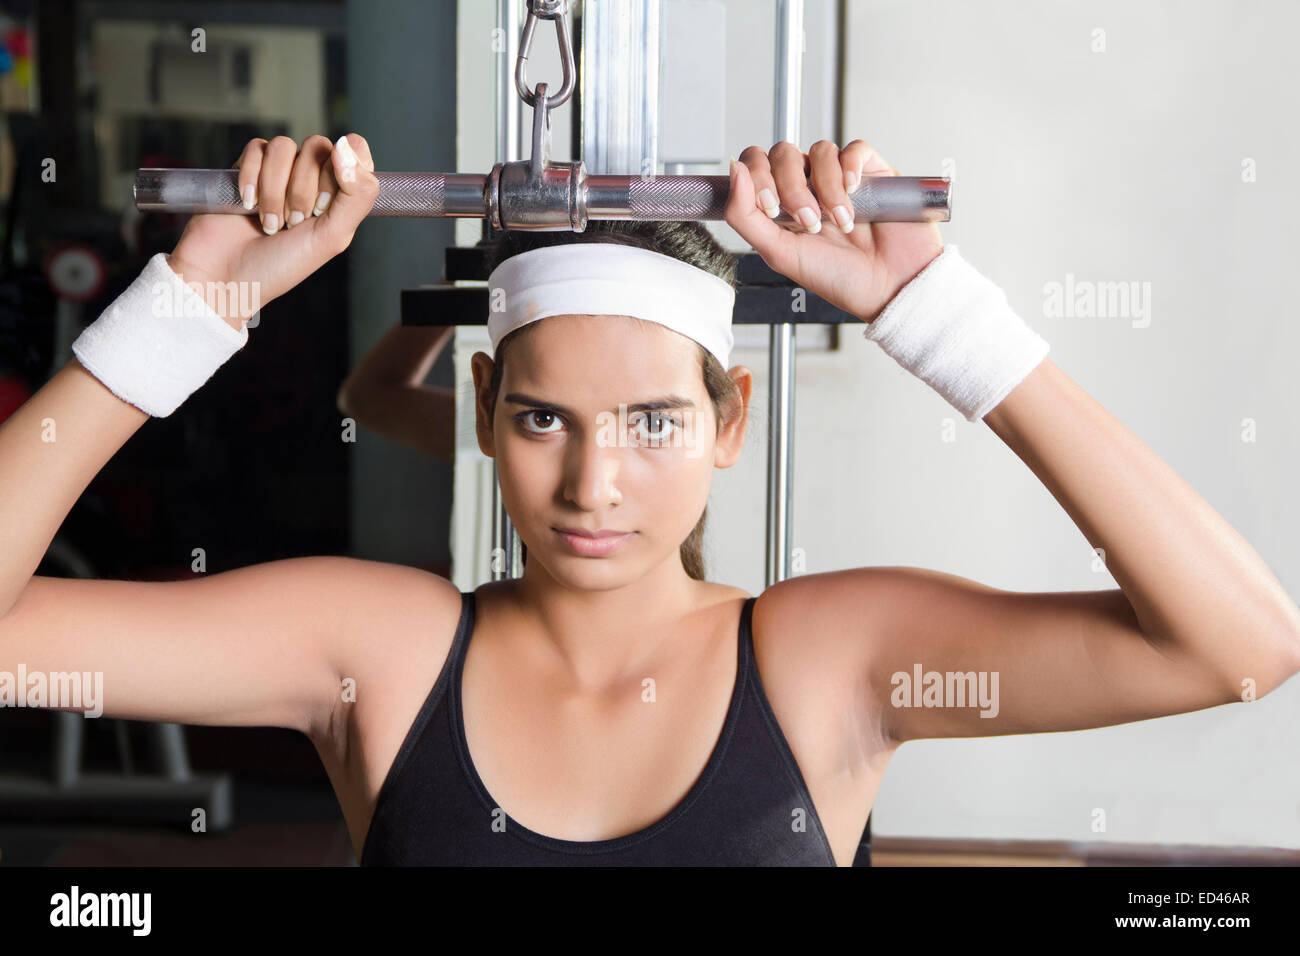 1 indian sports lady gym Body Building Stock Photo